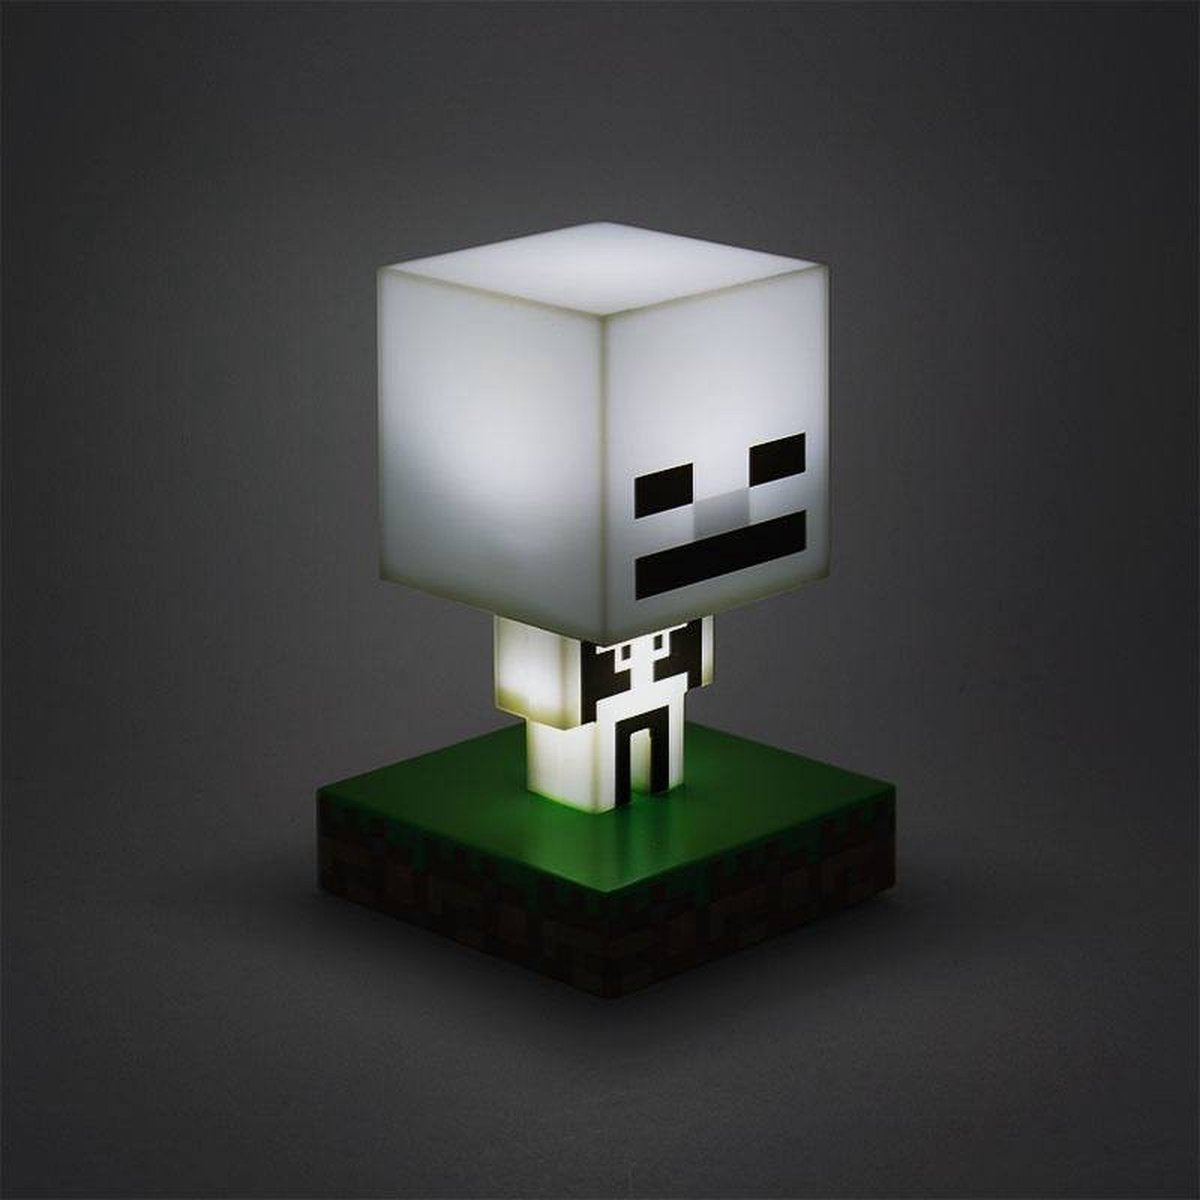 Minecraft Skeleton icon light Gamesellers.nl